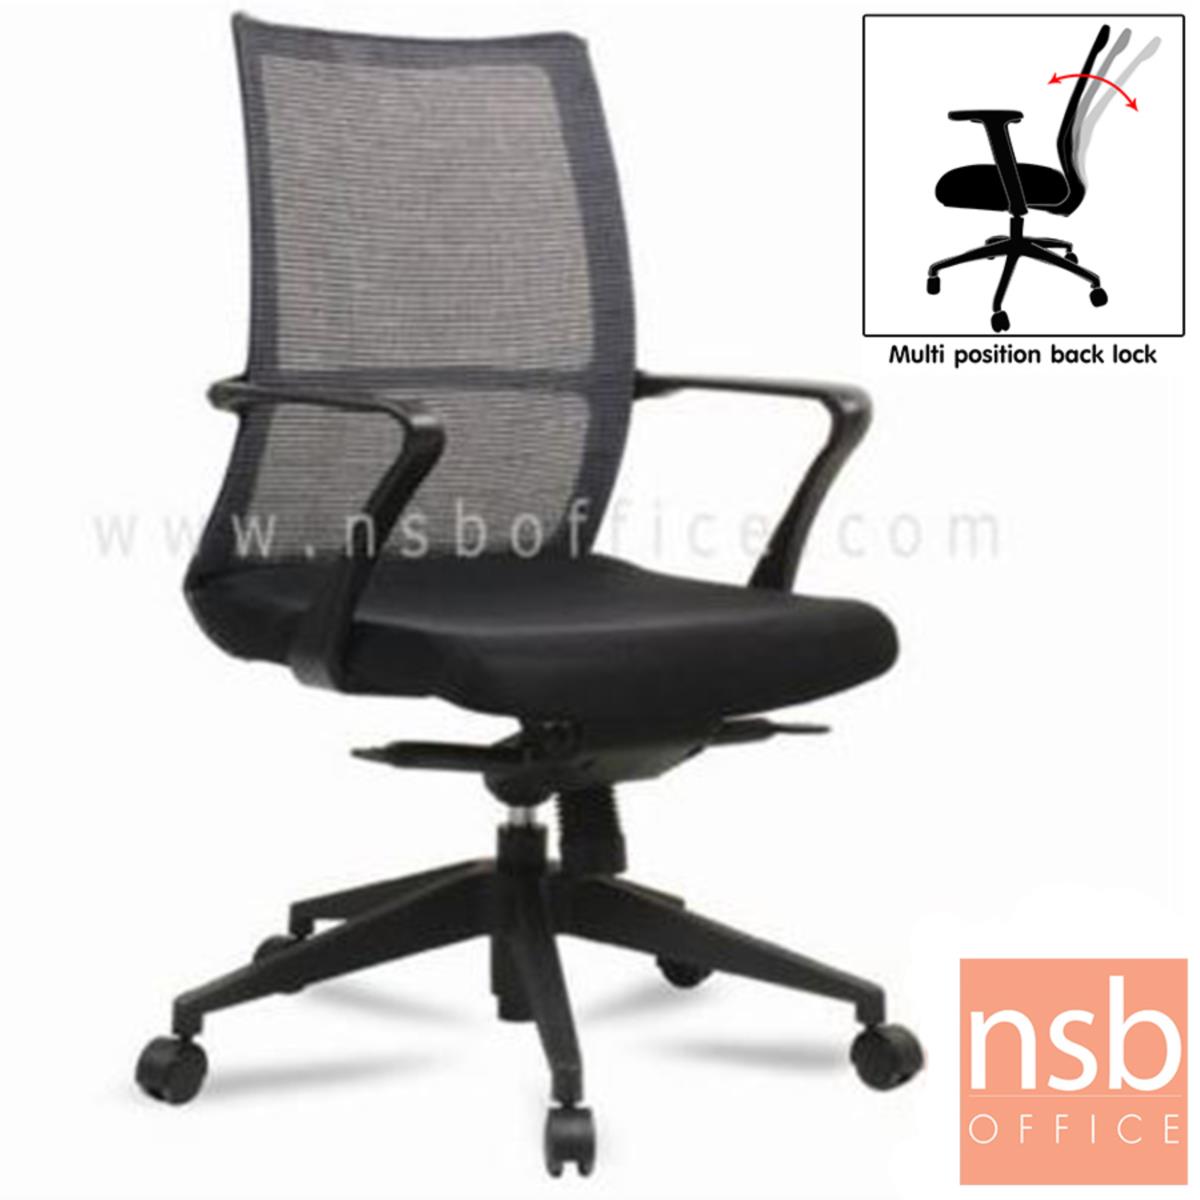 B24A066:เก้าอี้สำนักงานหลังเน็ต รุ่น Tate (เทต)  ขาพลาสติก